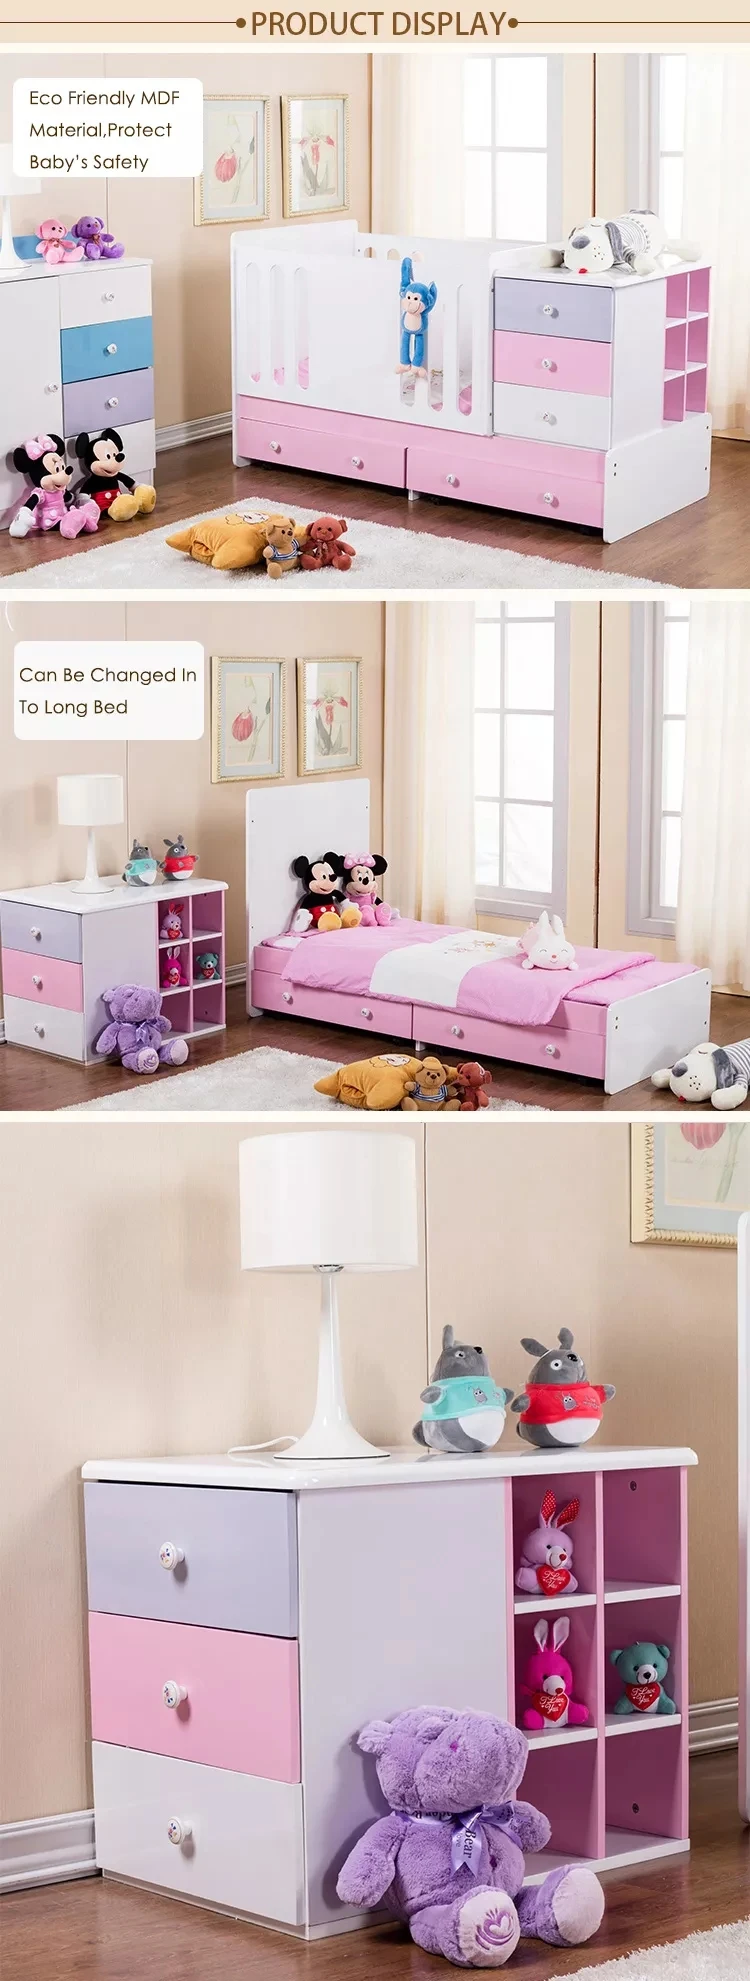 Luxury Bedroom Furniture Modern Kids Solid Wood Bedding Crib Set Baby Cot Bed Baby Cribs